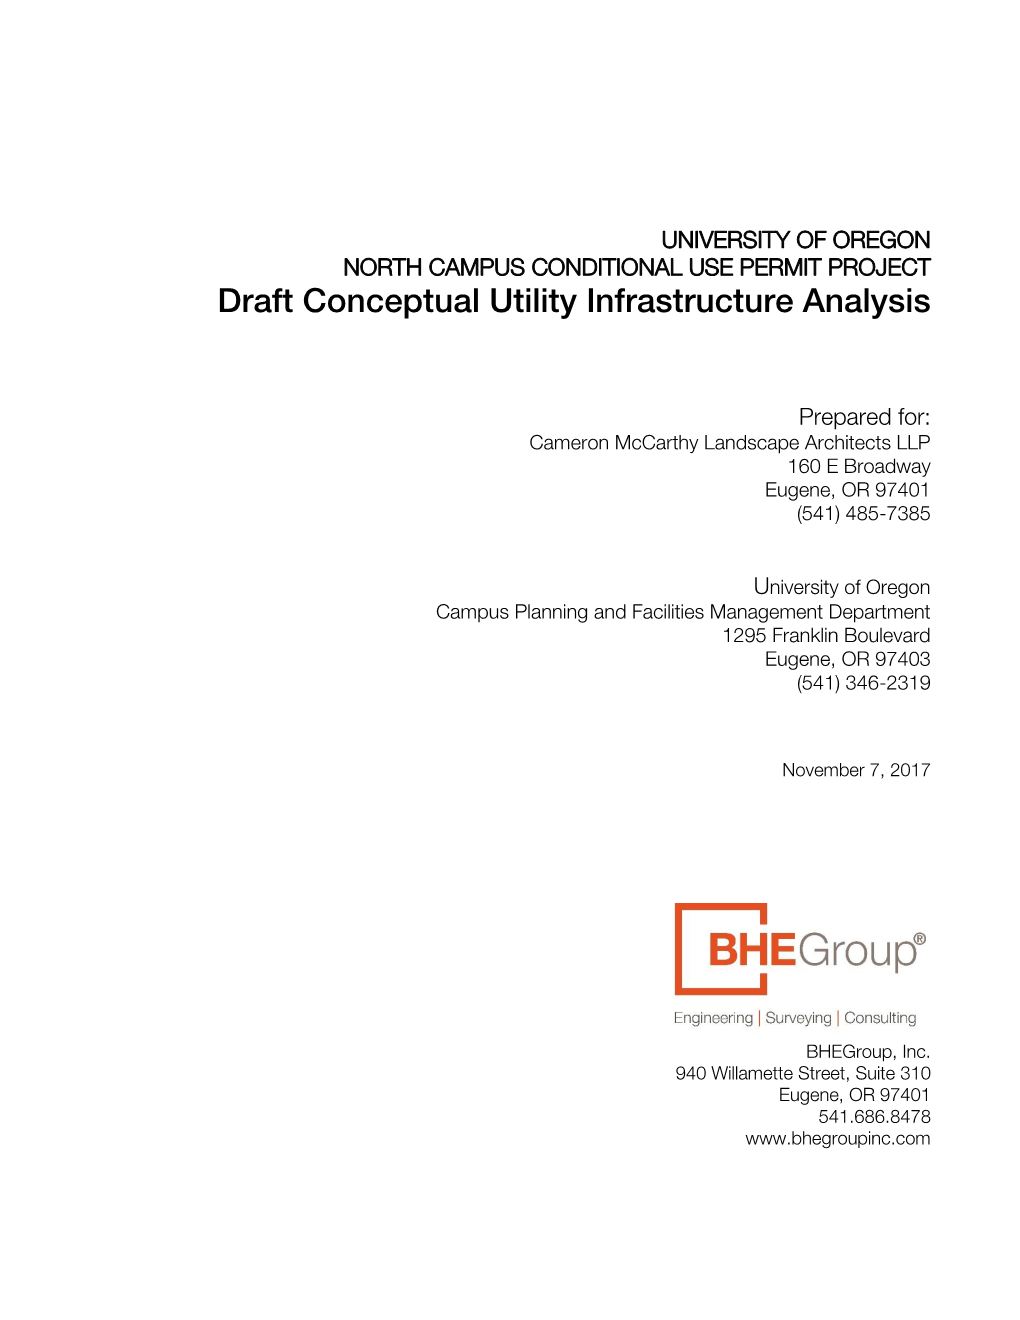 Draft Utilities Report